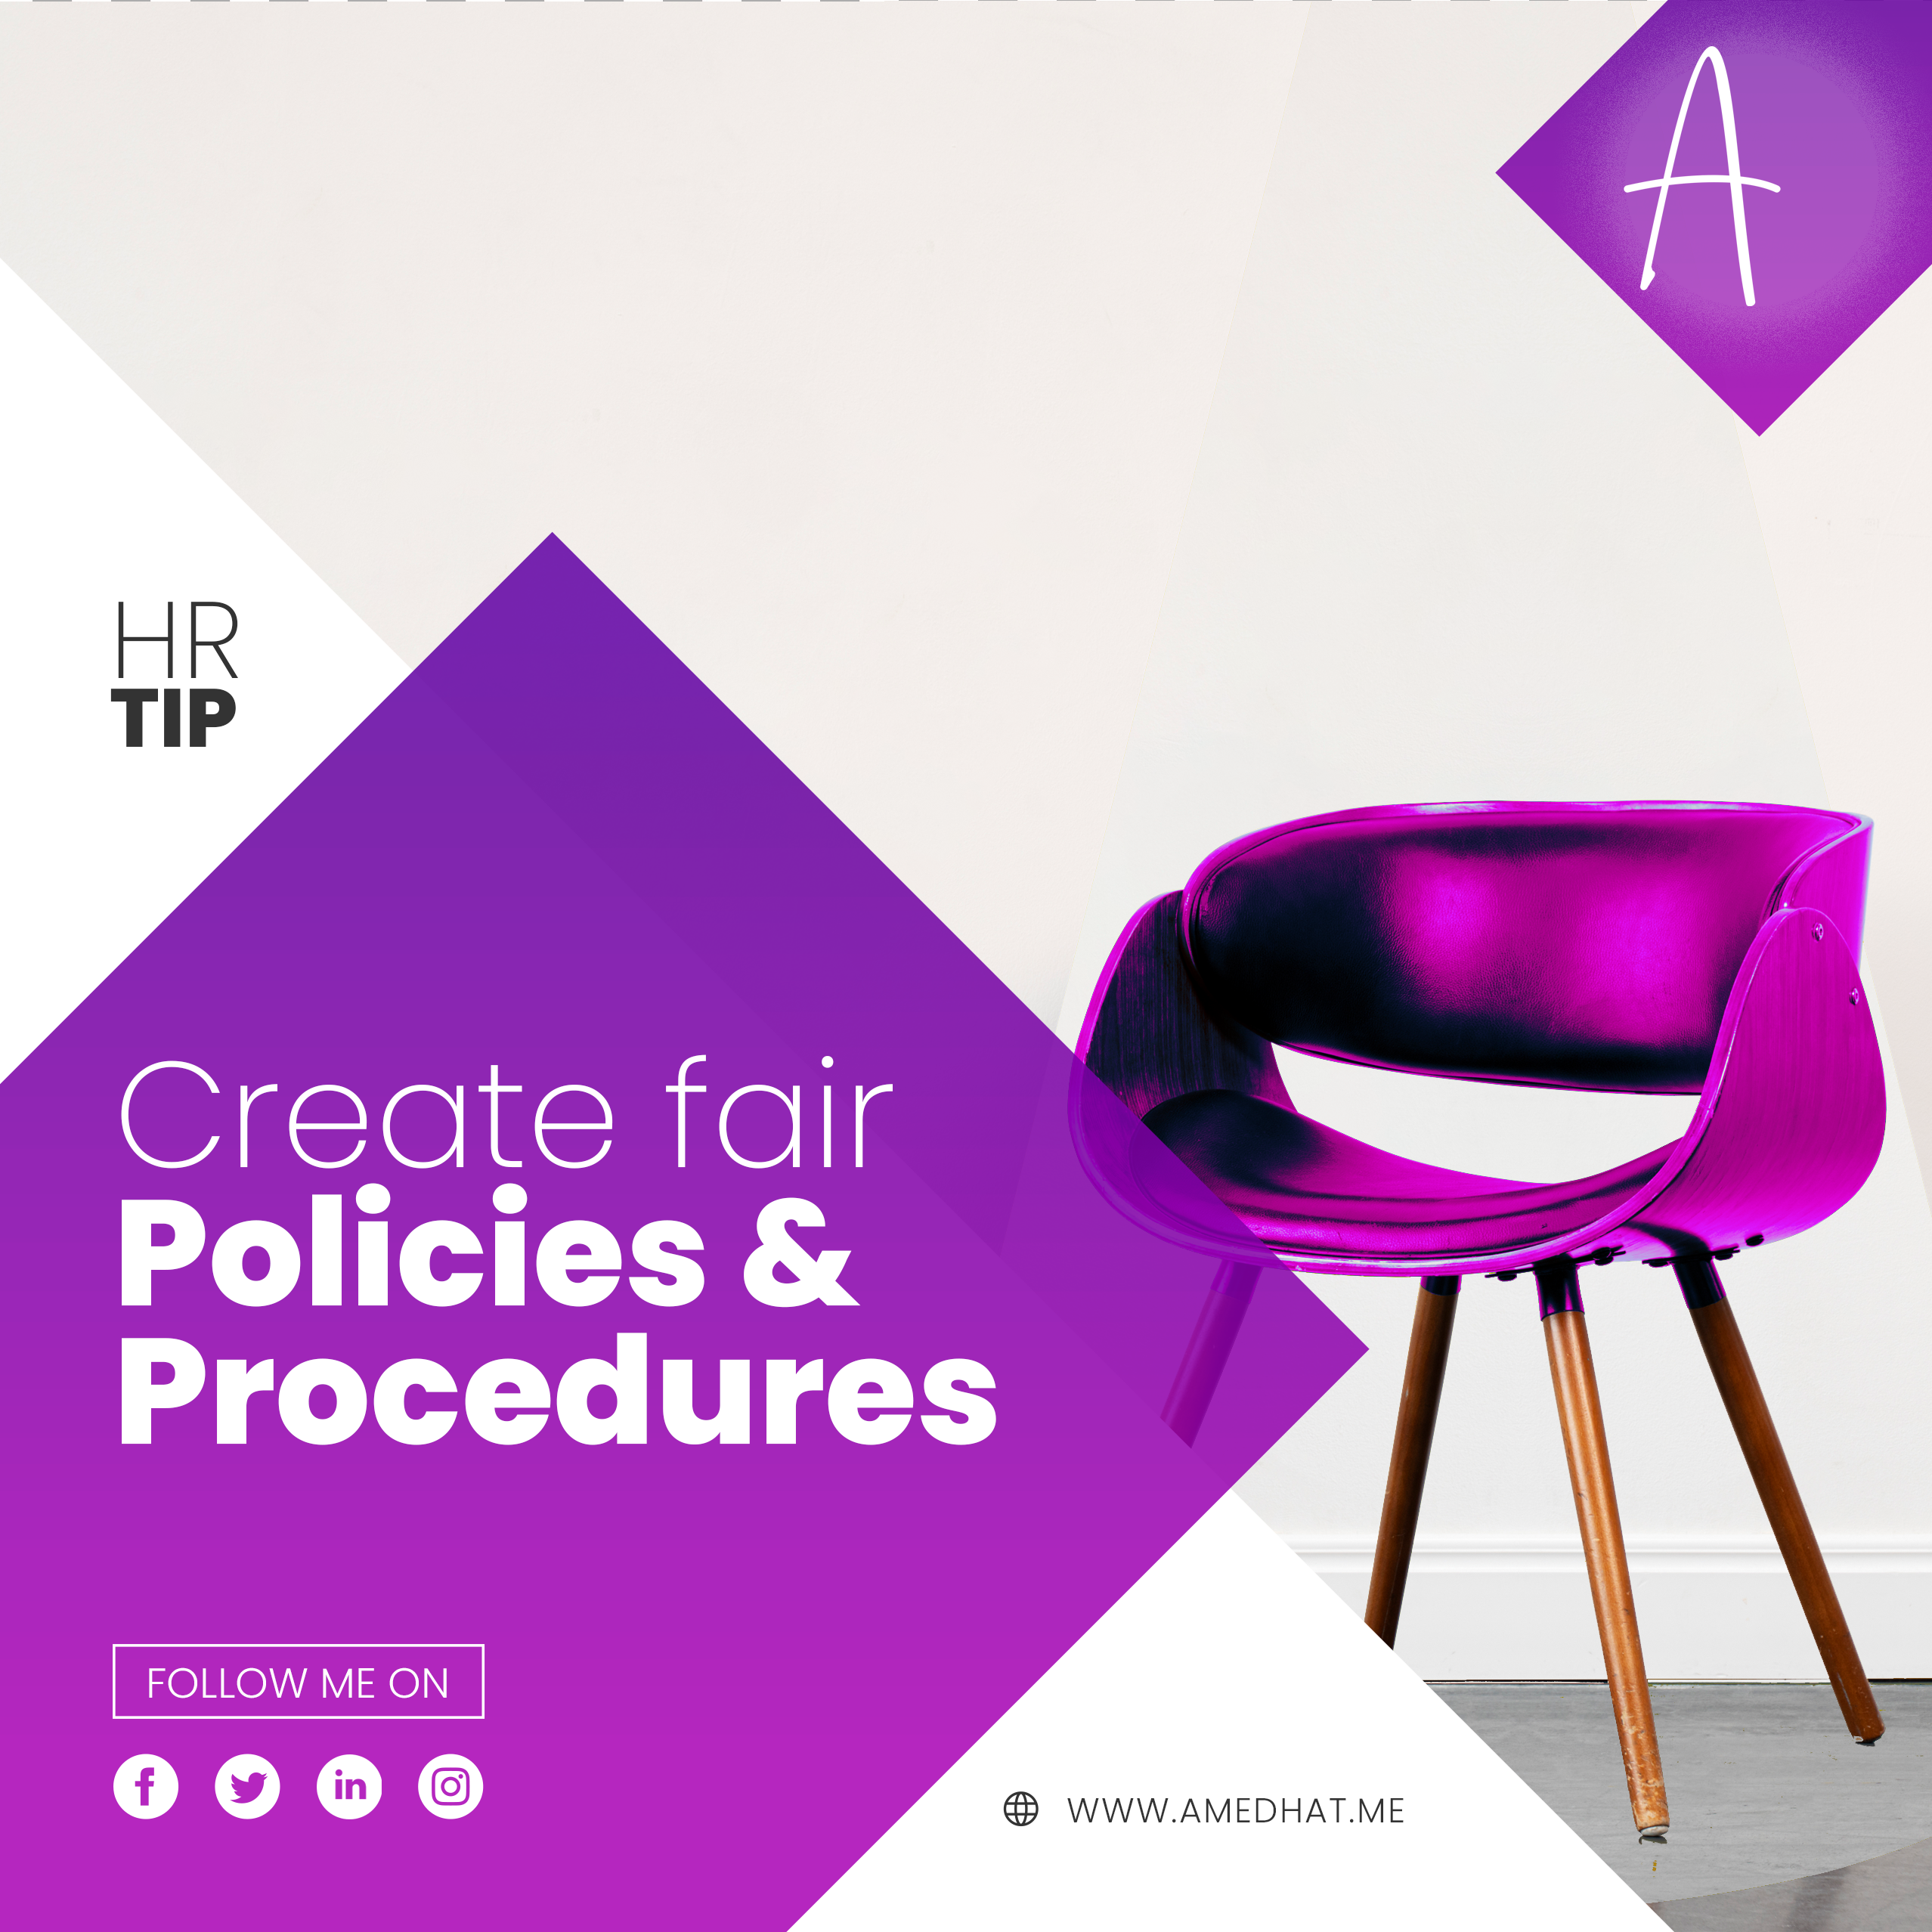 How to create corporate policies & procedures